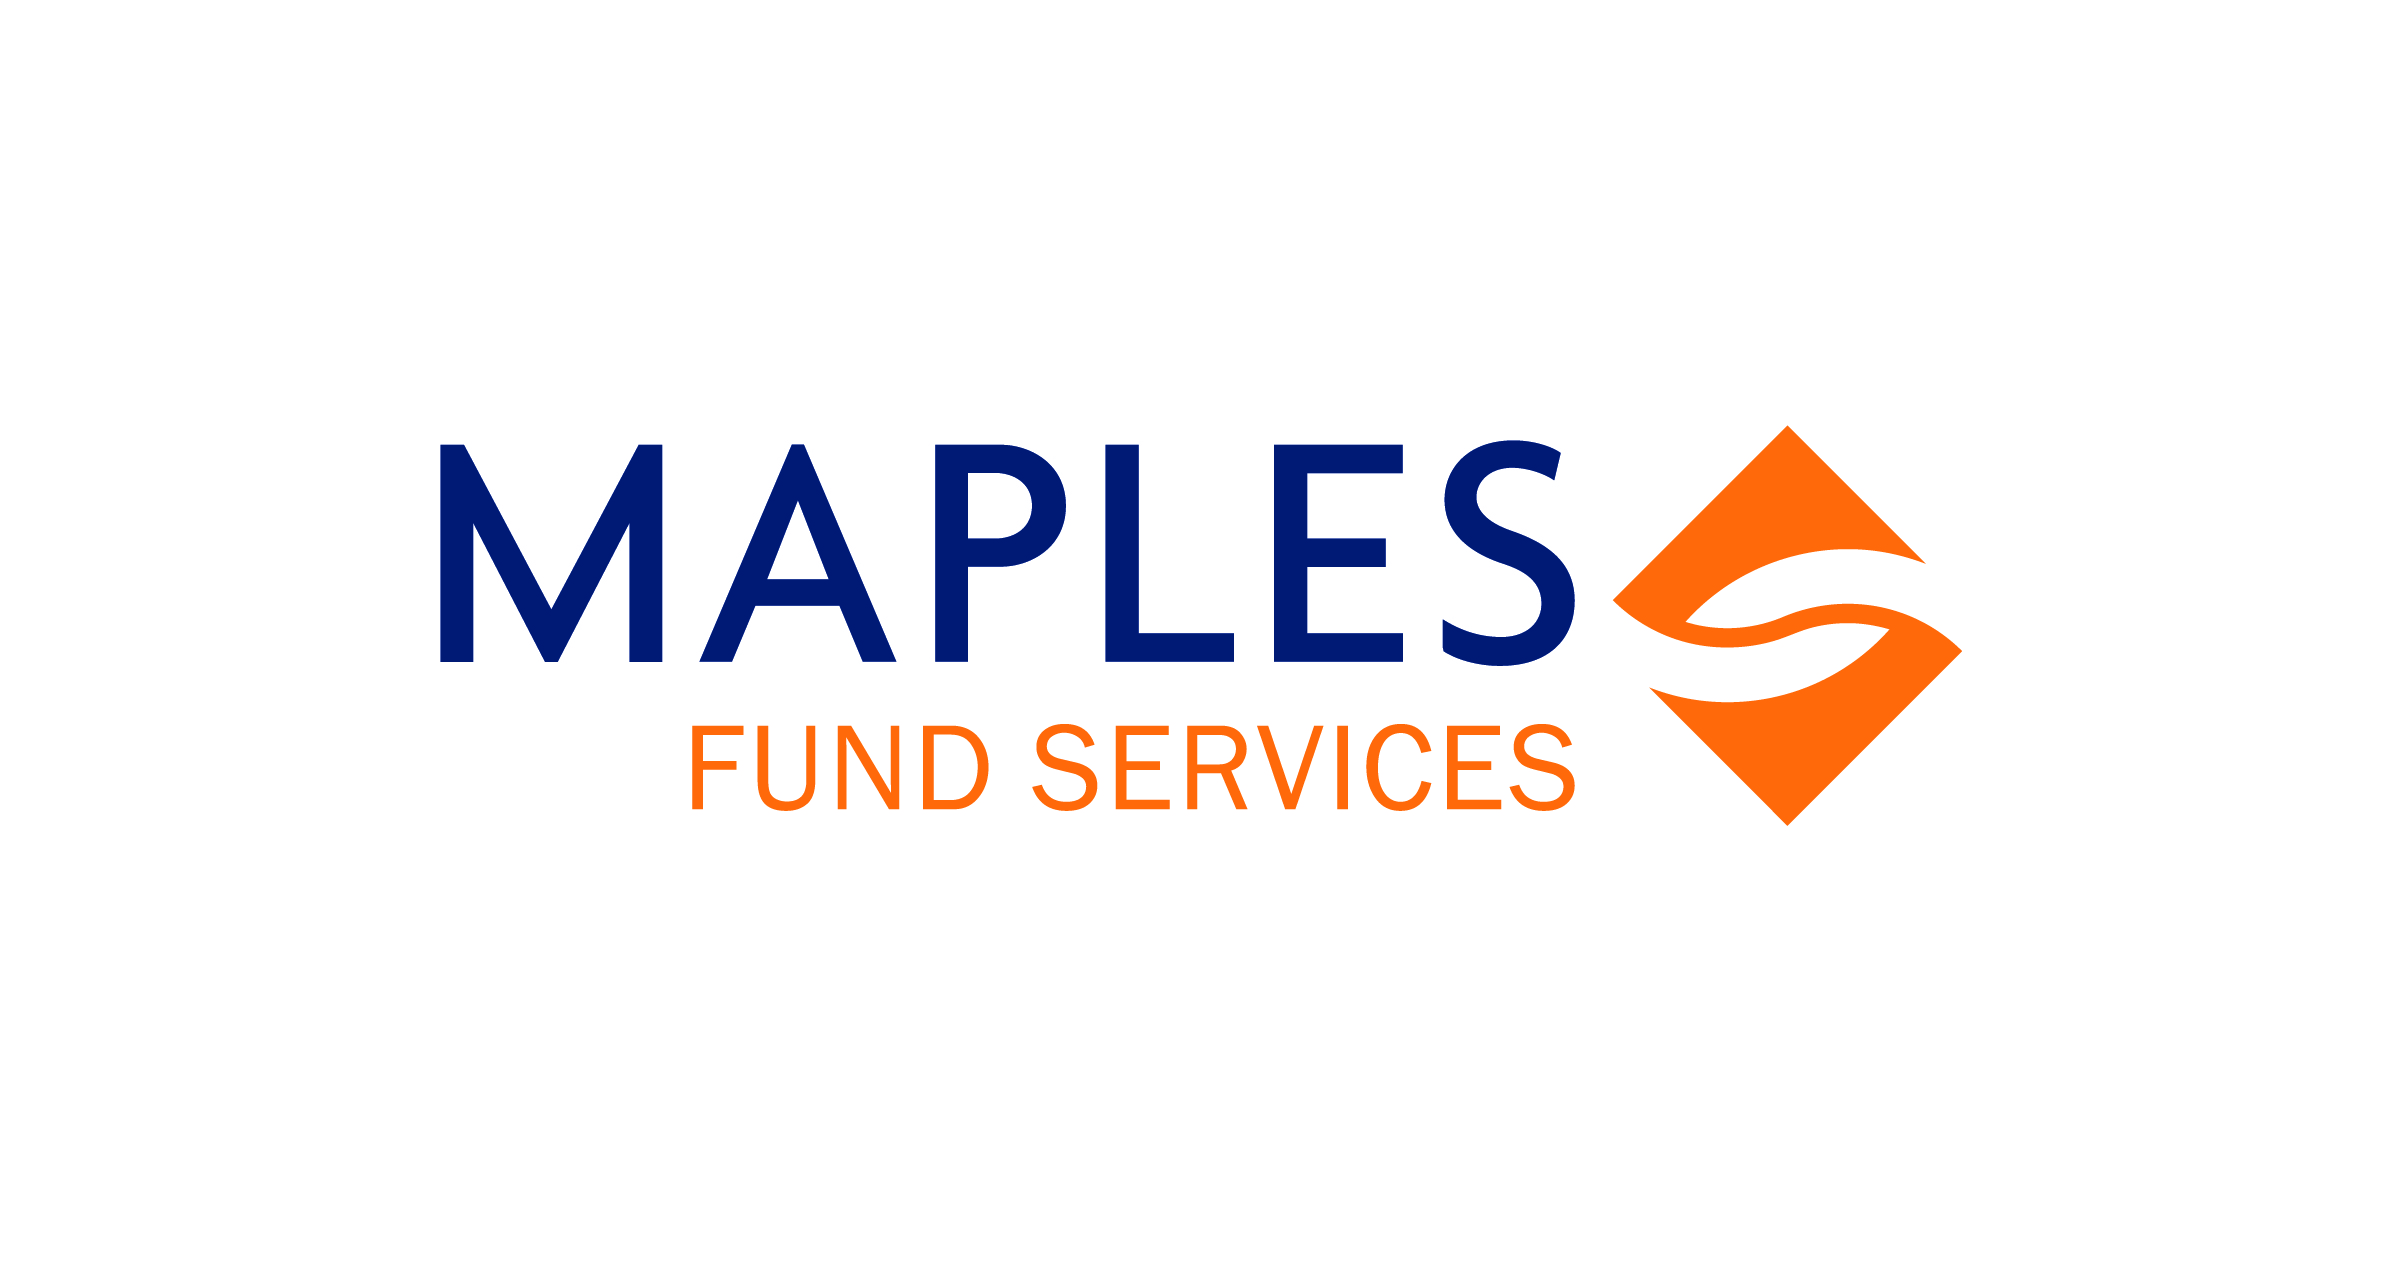 Maples Fund Services Logo photo - 1